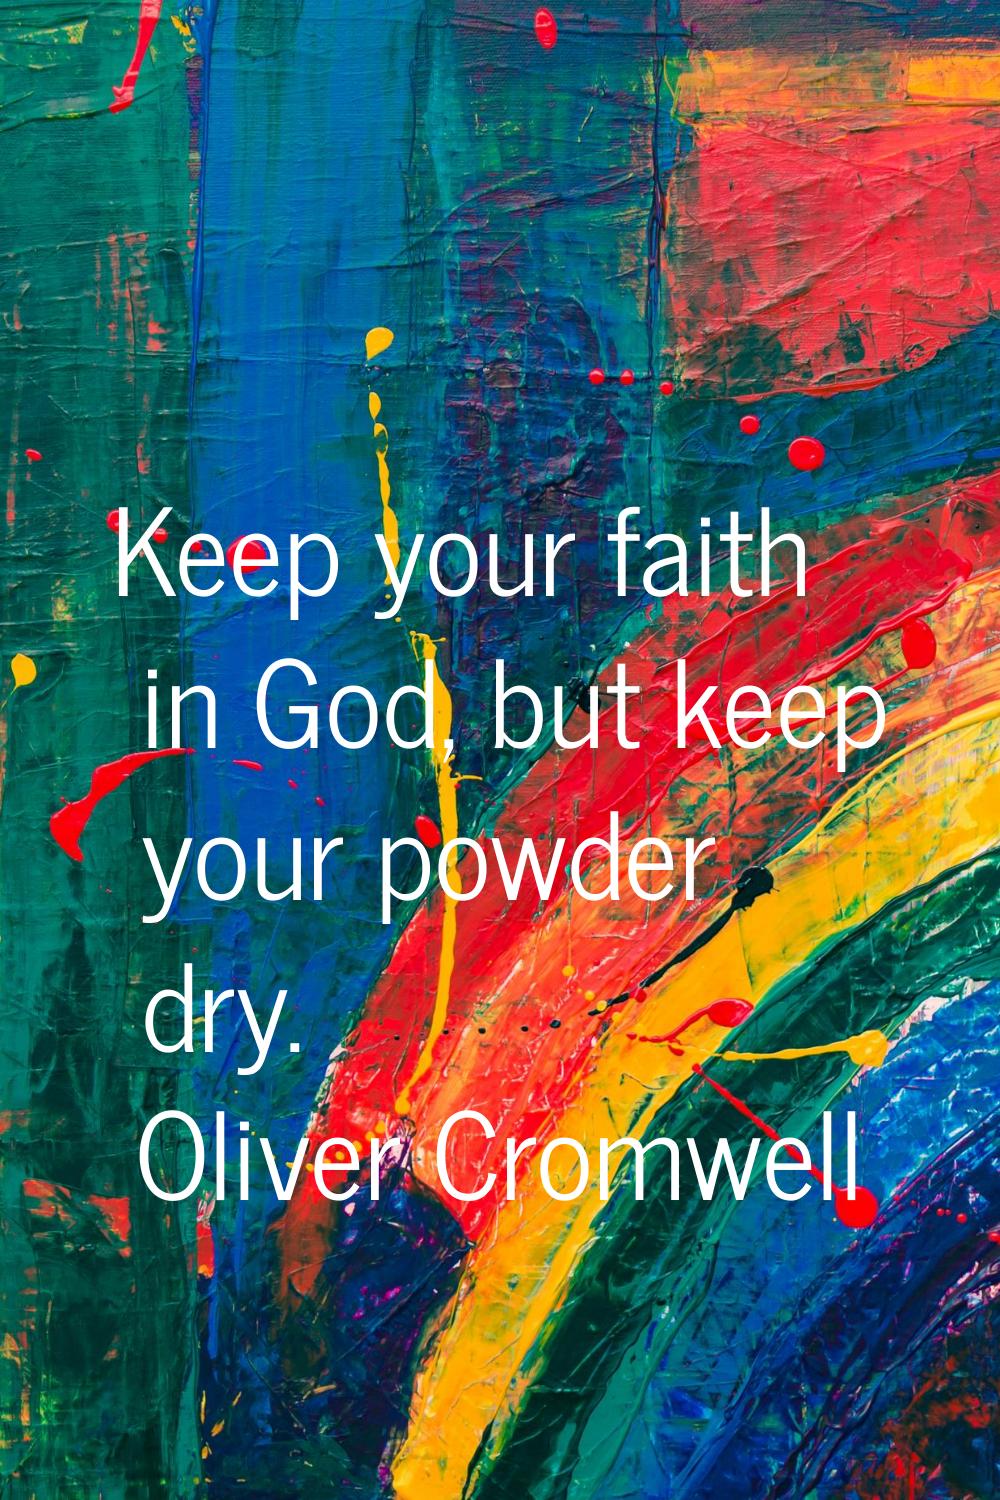 Keep your faith in God, but keep your powder dry.